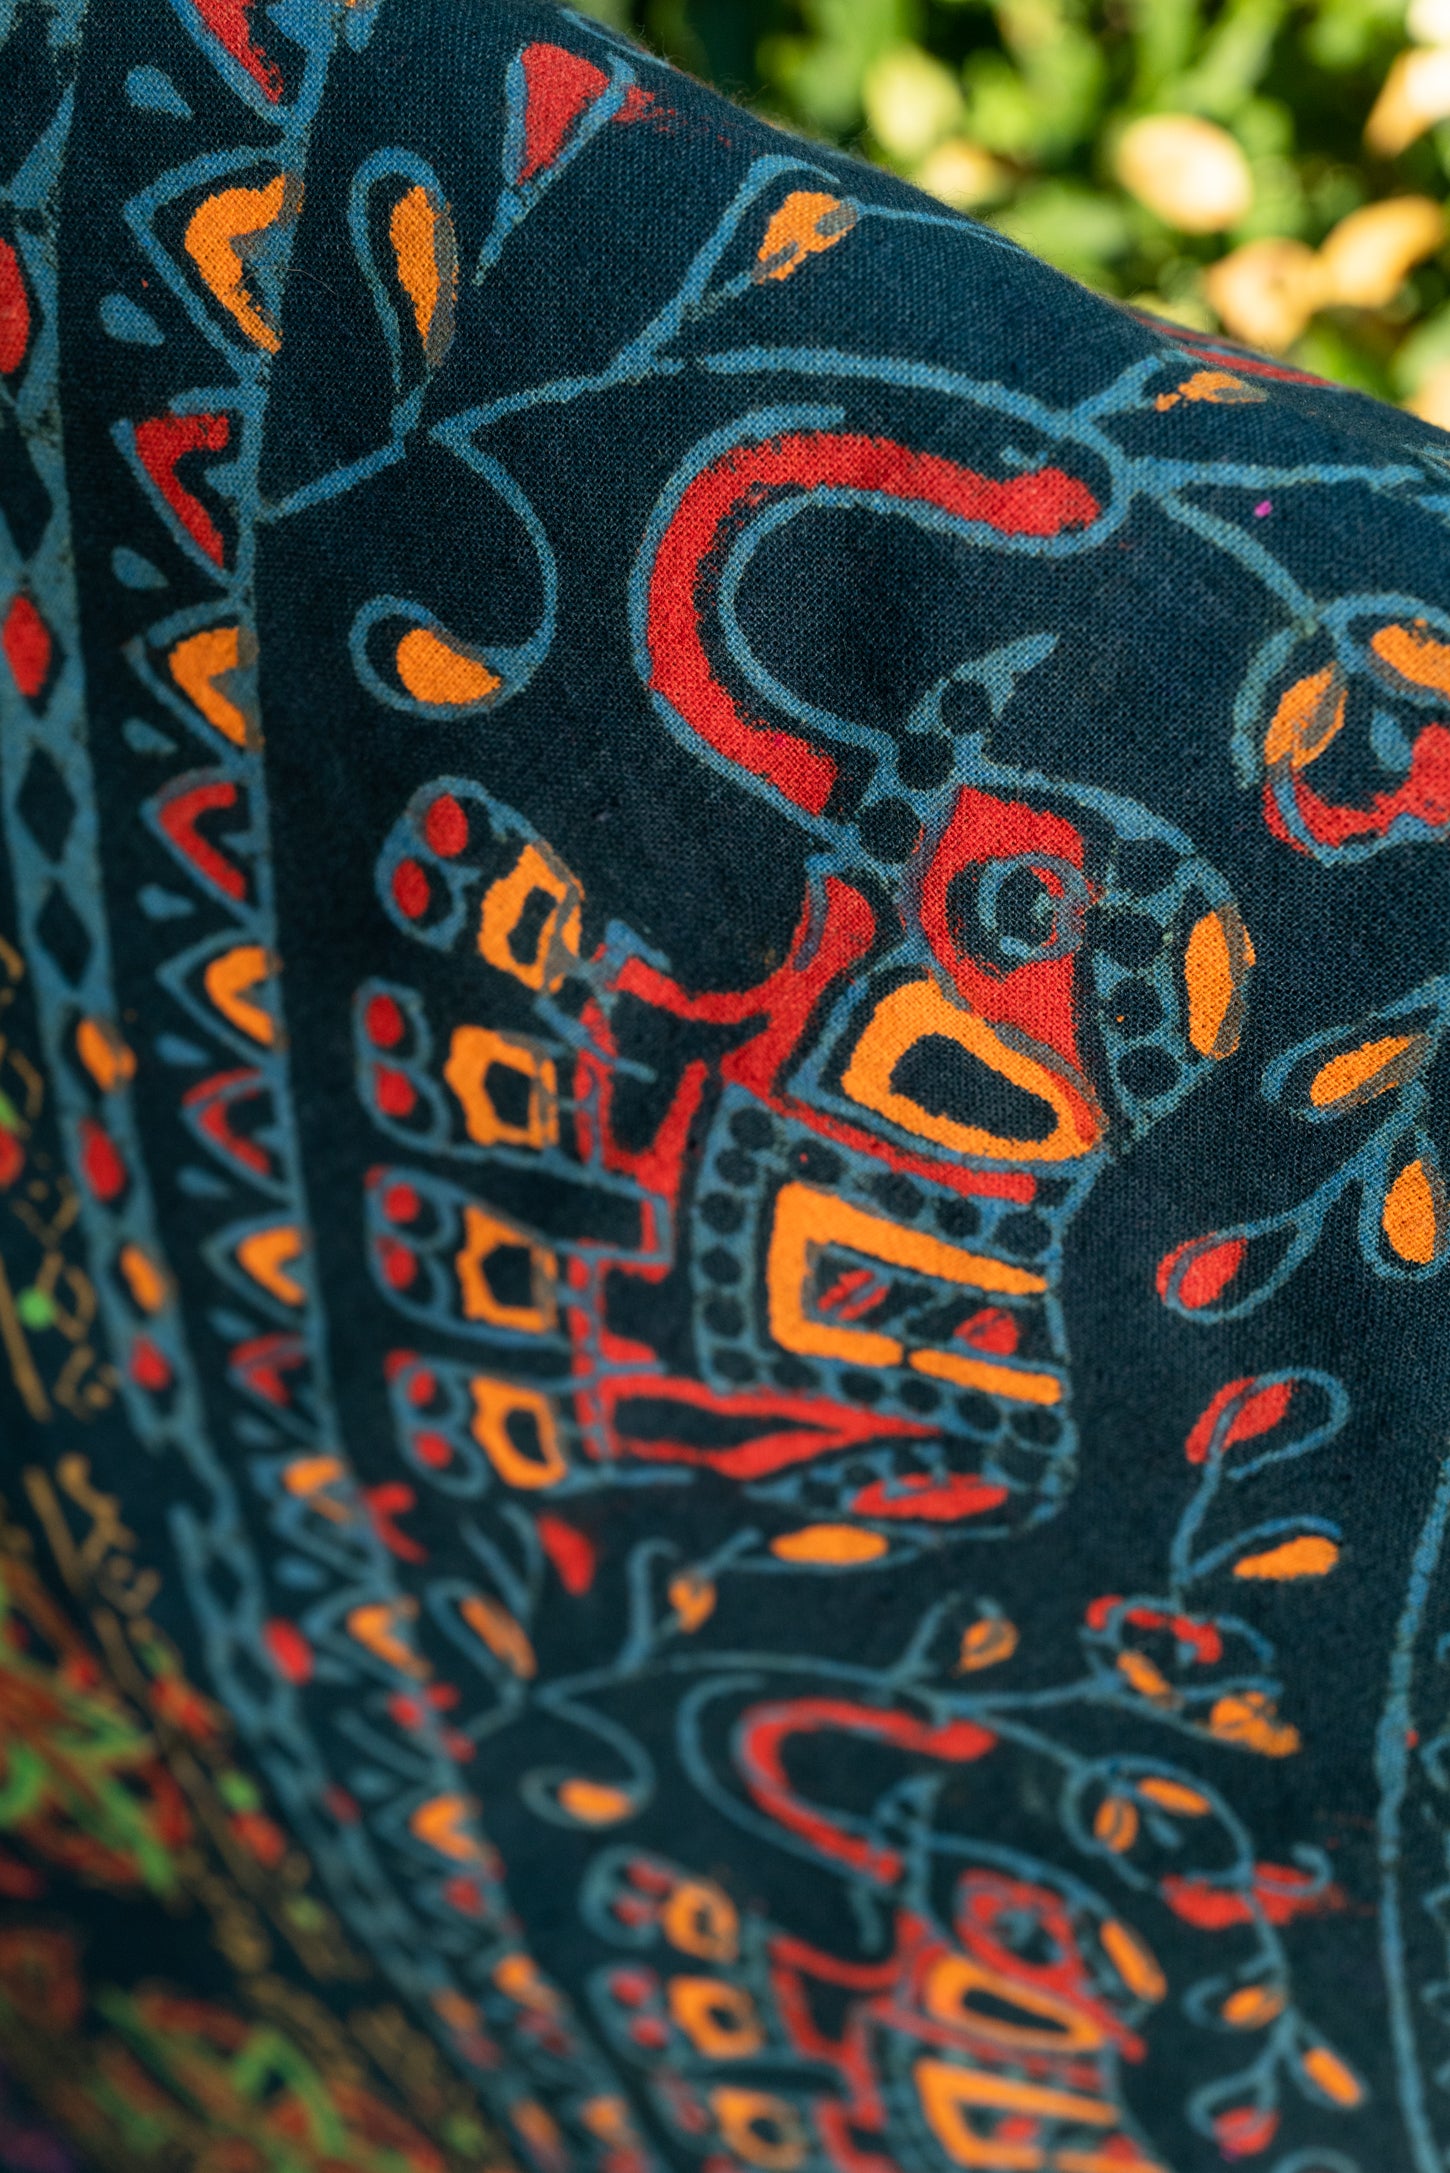 Traditional Elephant Mandala Block Print Queen Tapestry